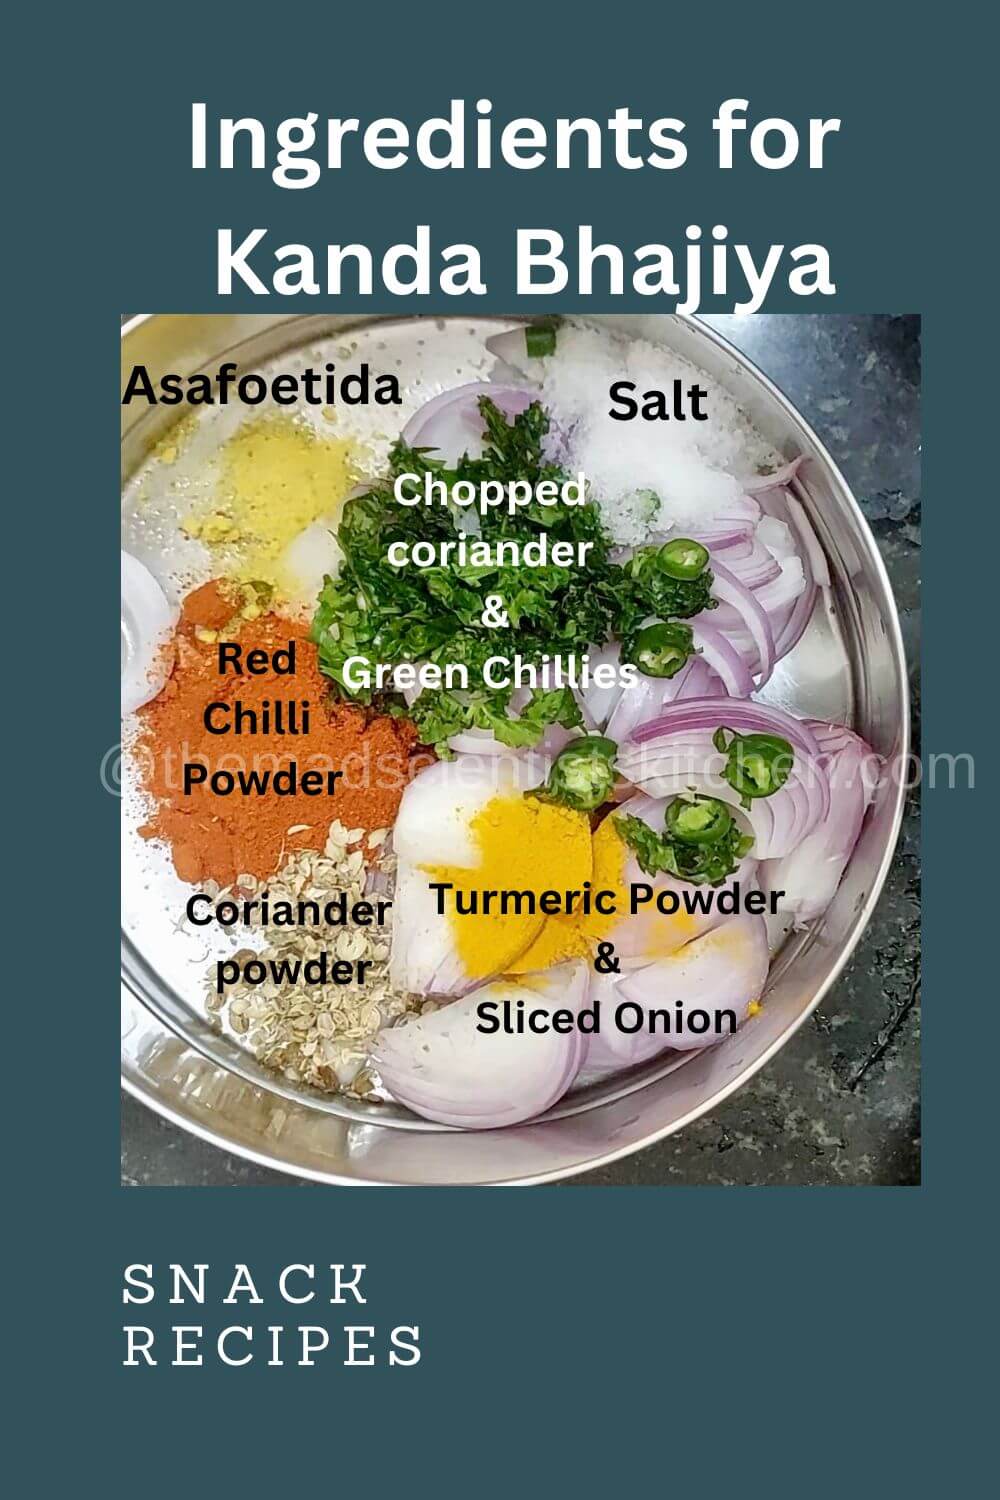 Ingredients used to make this batch of Kanda Bhajiya or Khekhda Bhaji